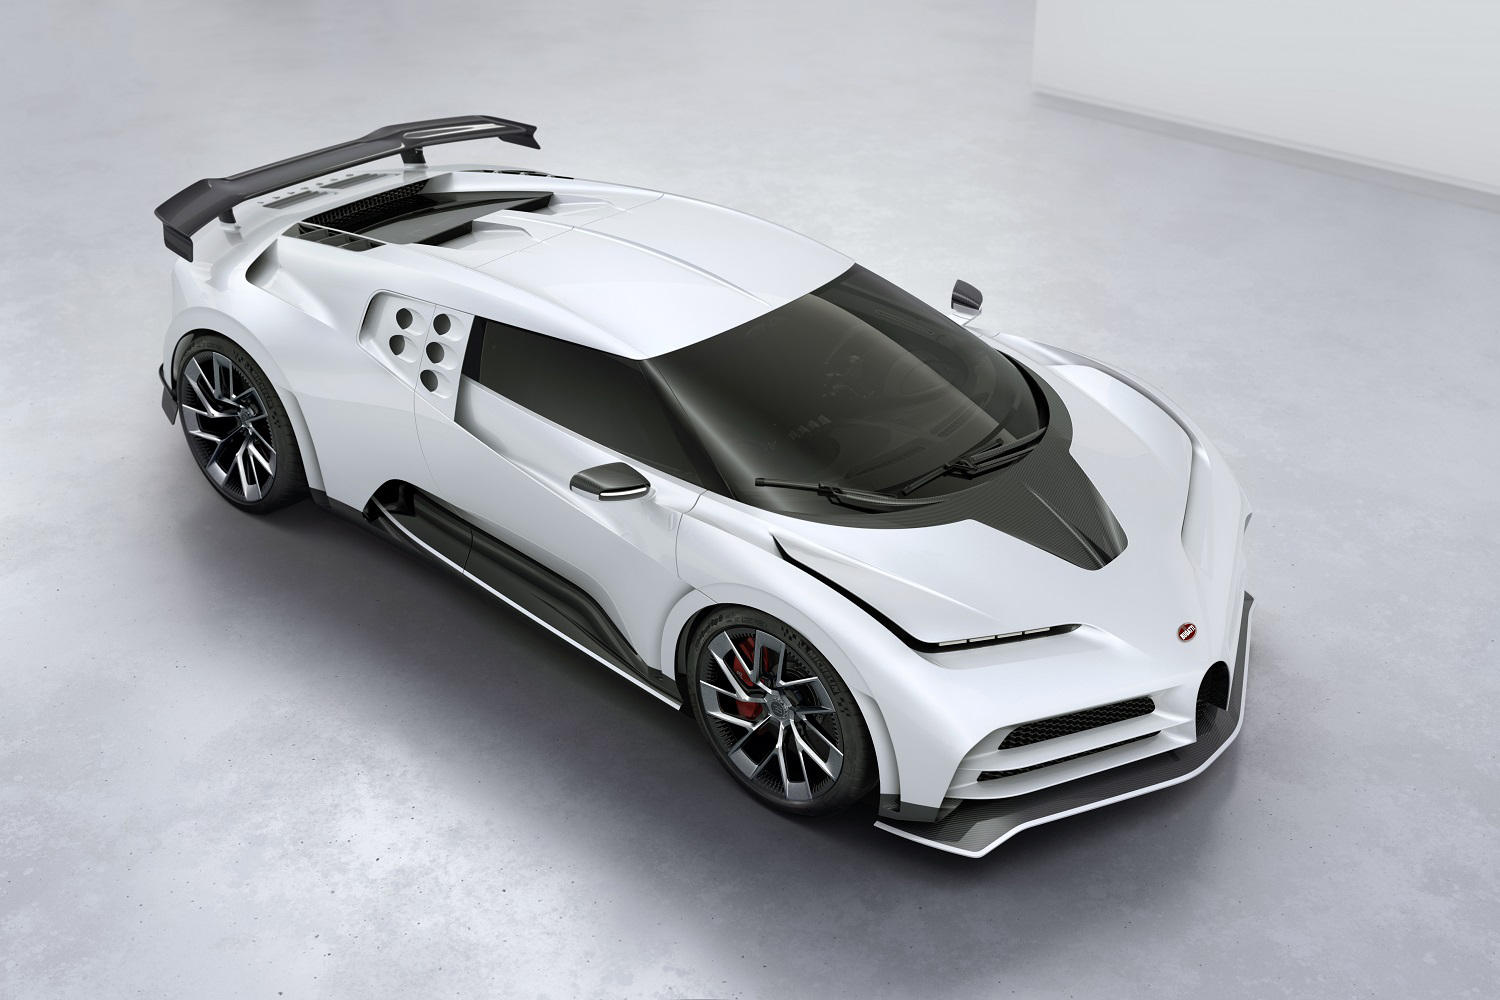 The Bugatti Centodieci Redefines Power